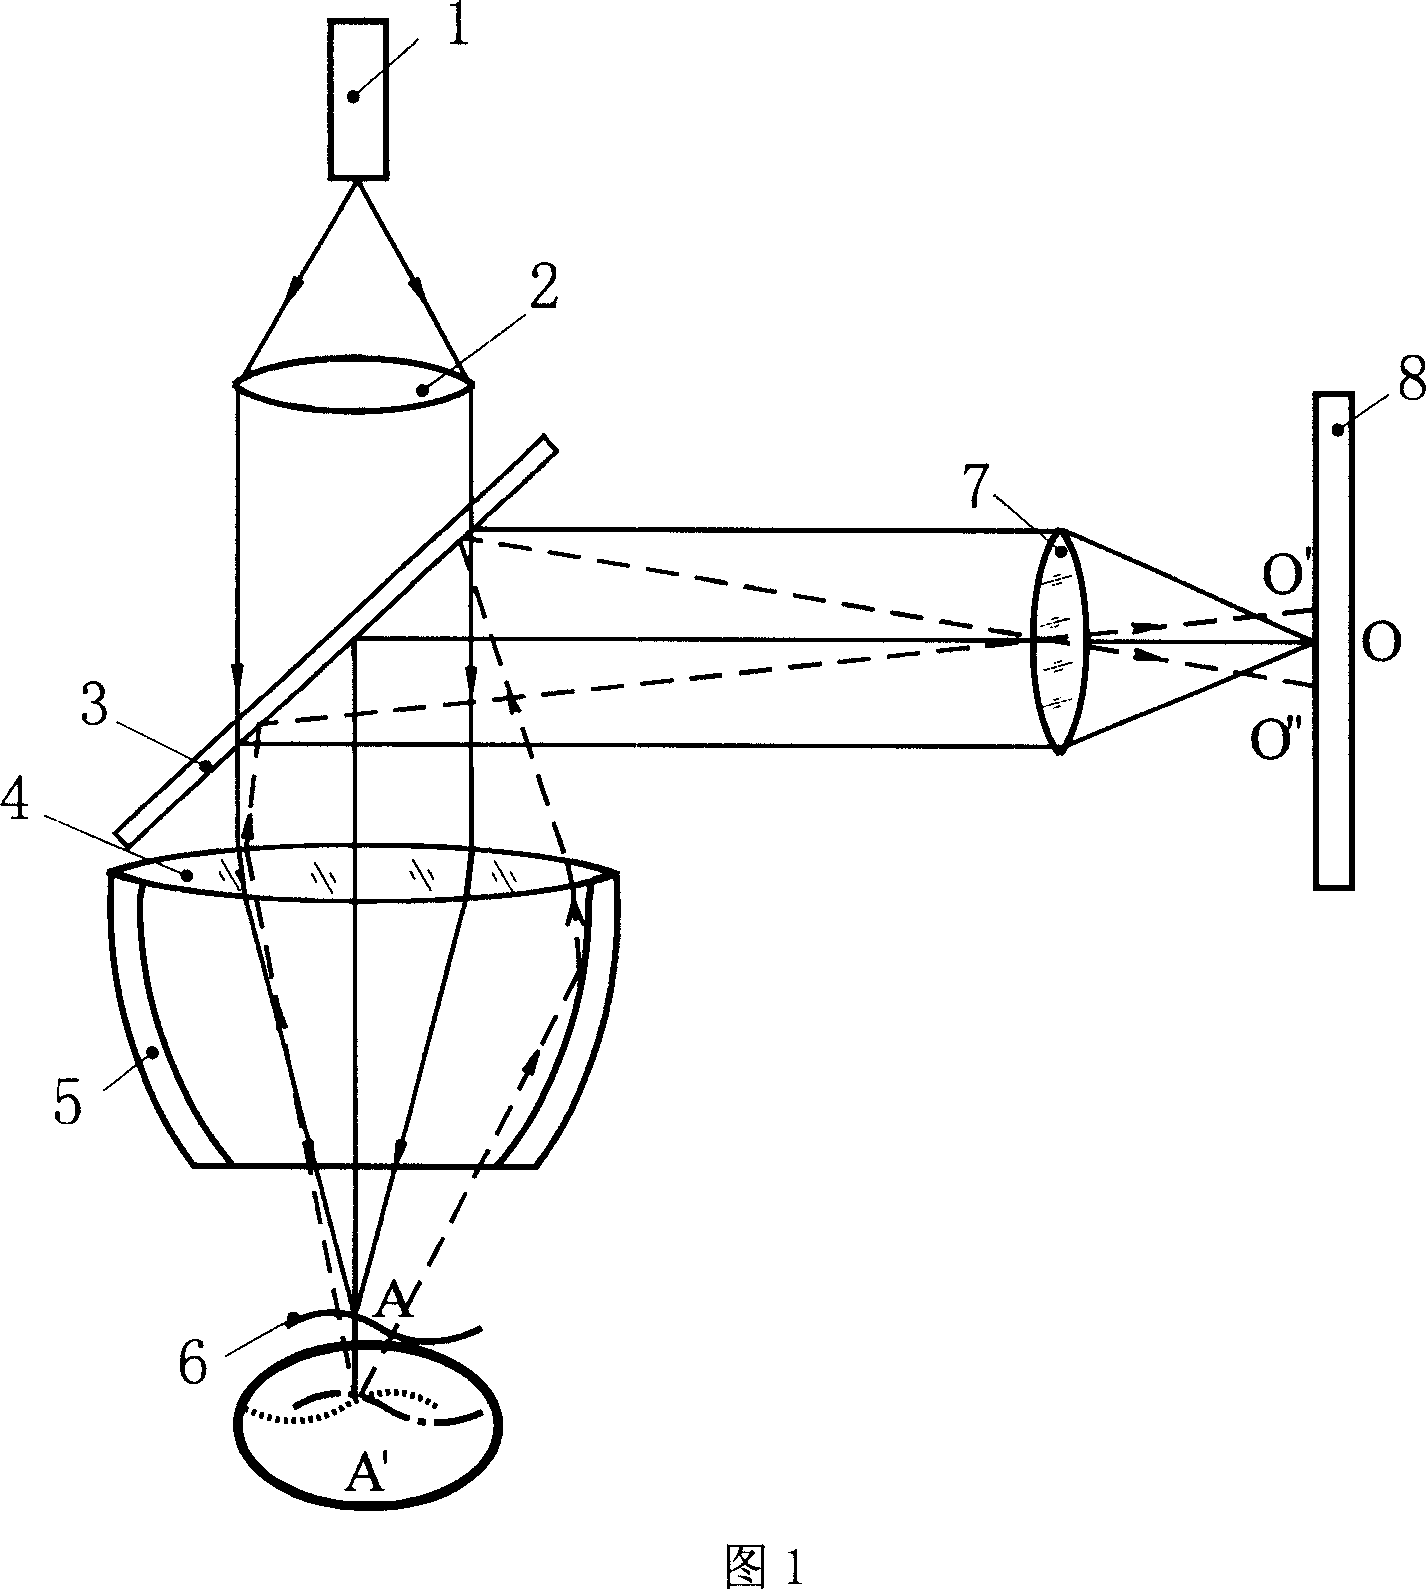 Single-photodetector confocal laser triangulation device